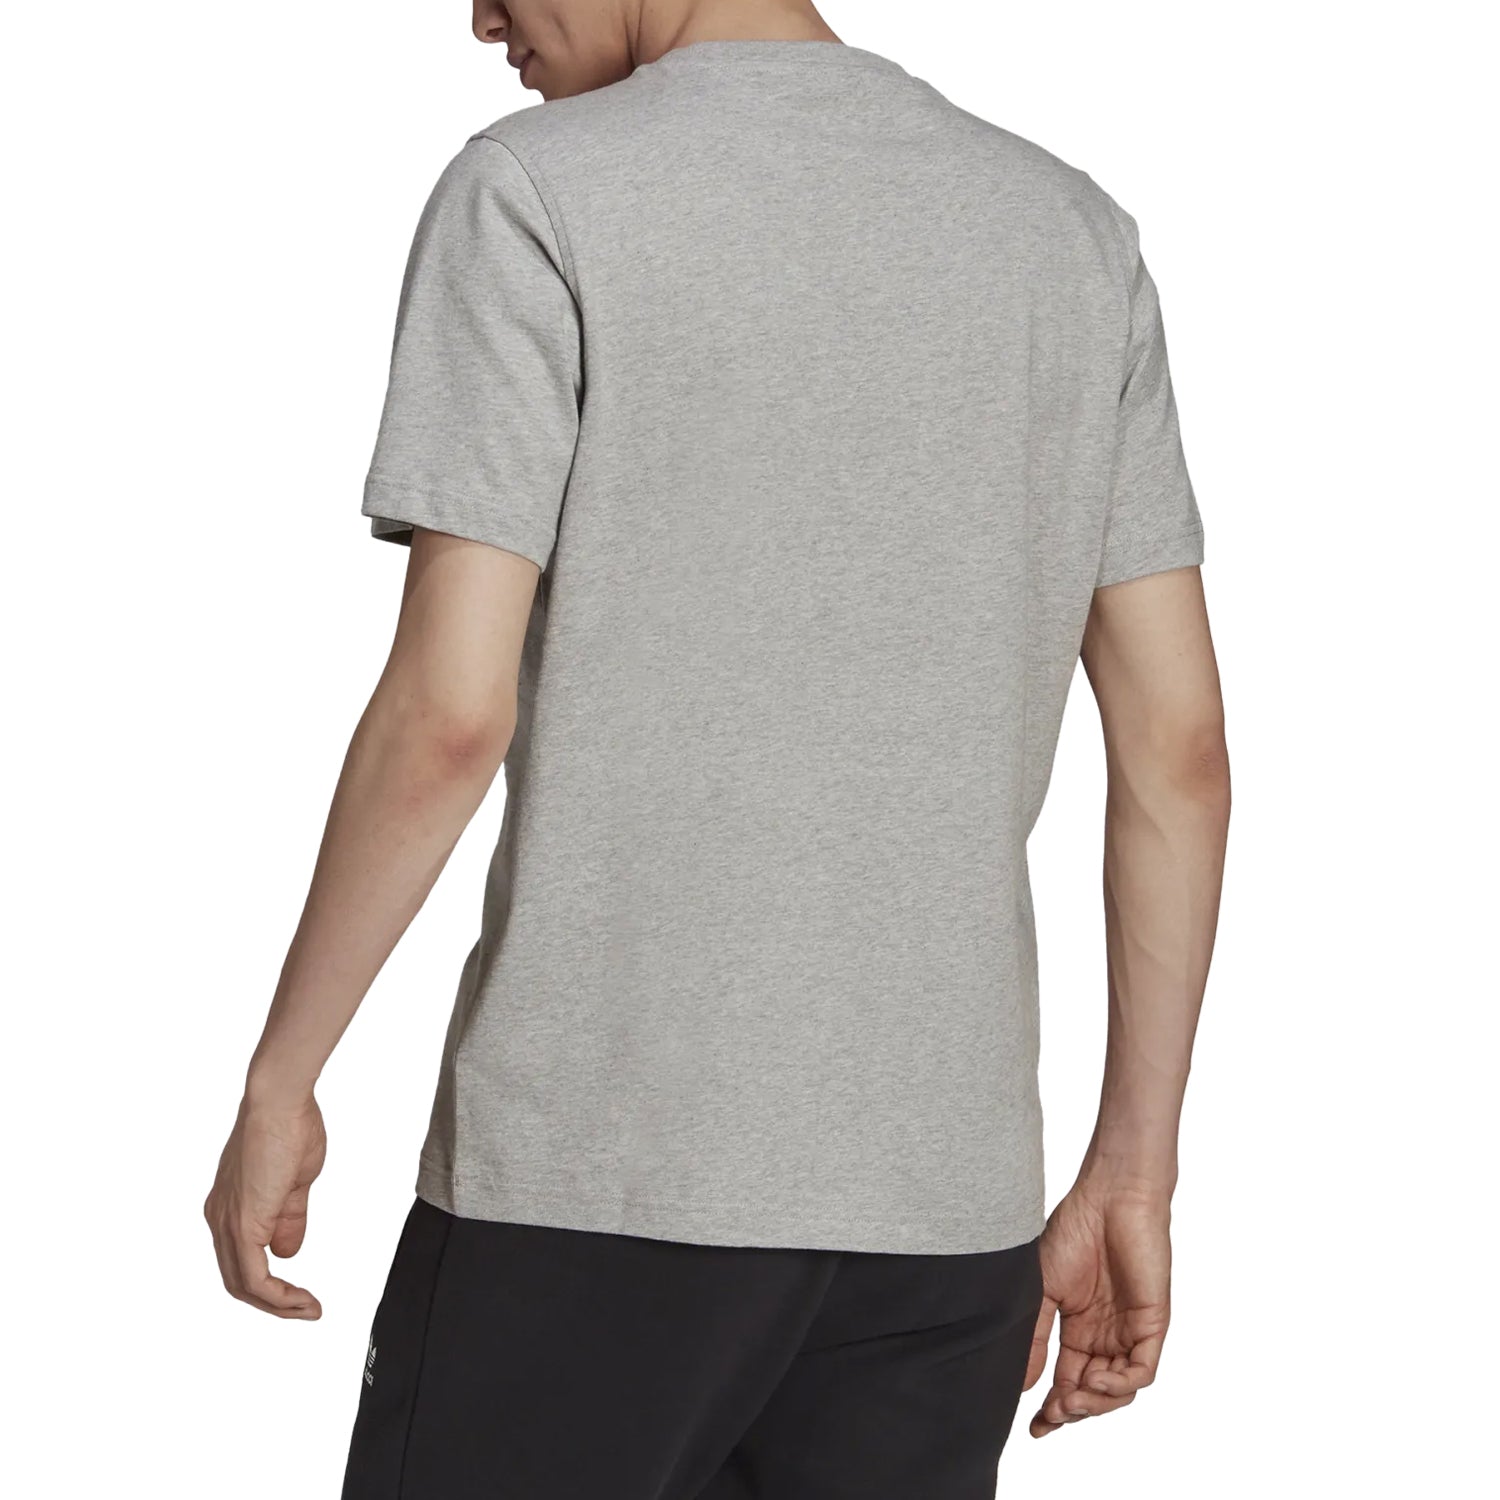 Adidas Trefoil T-shirt Mens Style : H06643